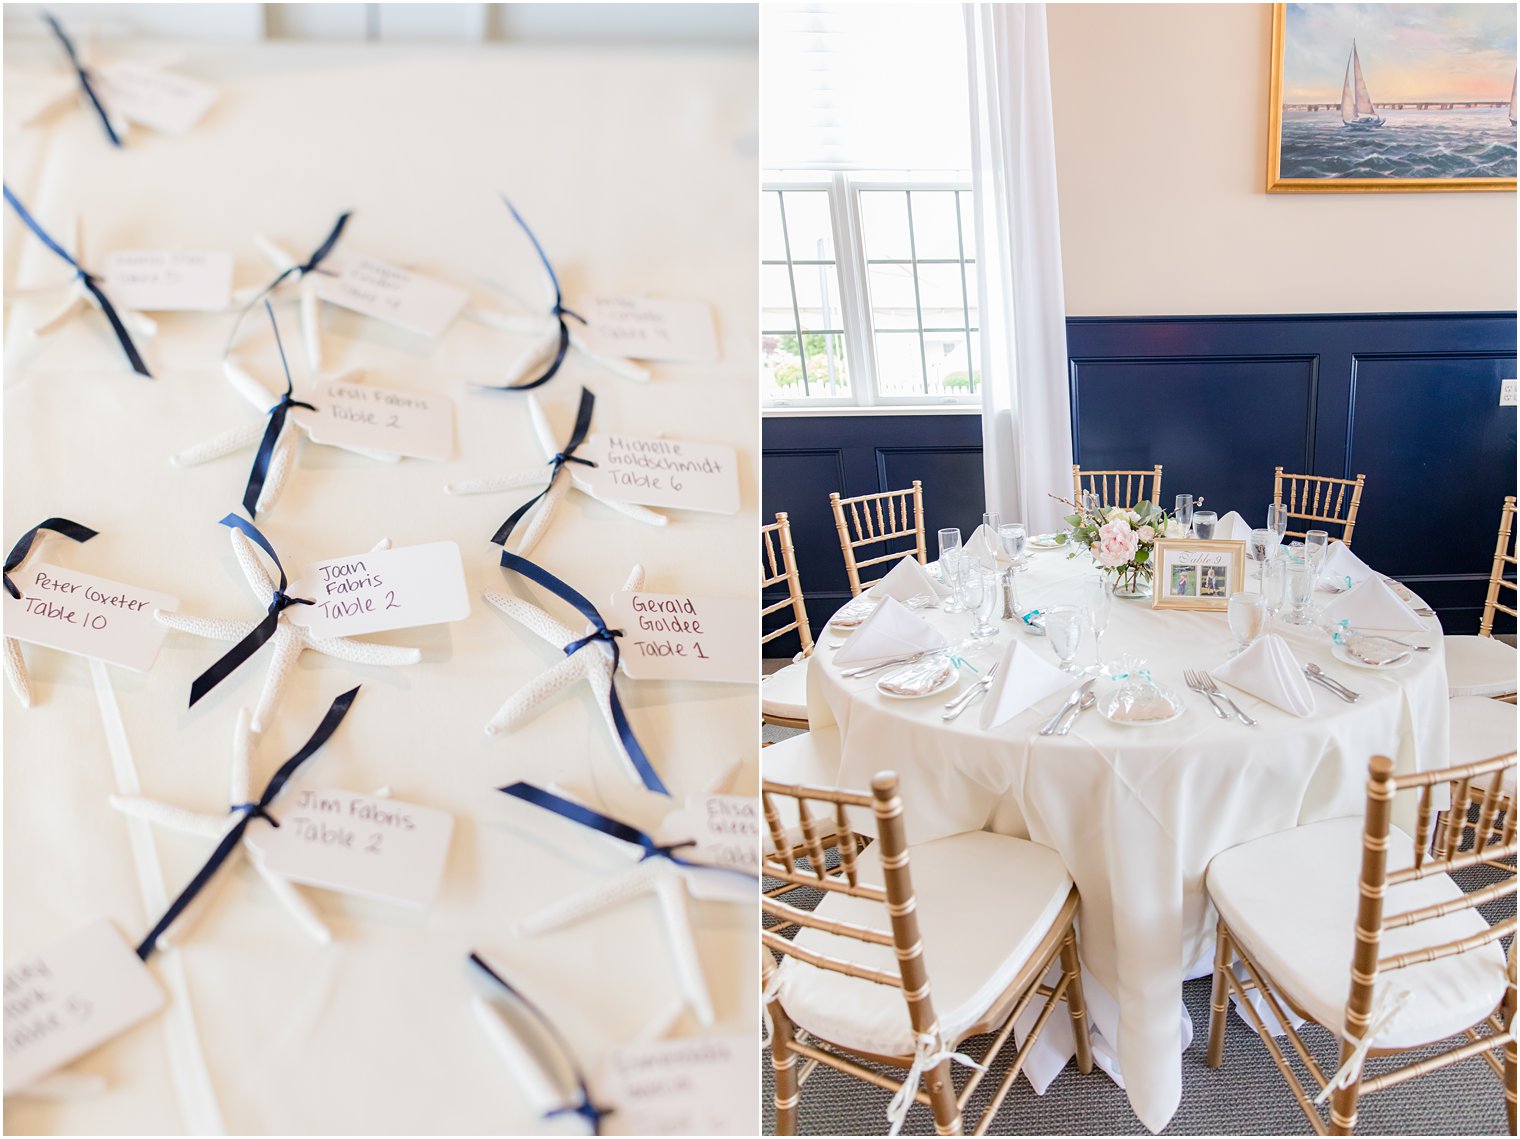 sea star seating cards for yacht club wedding reception 